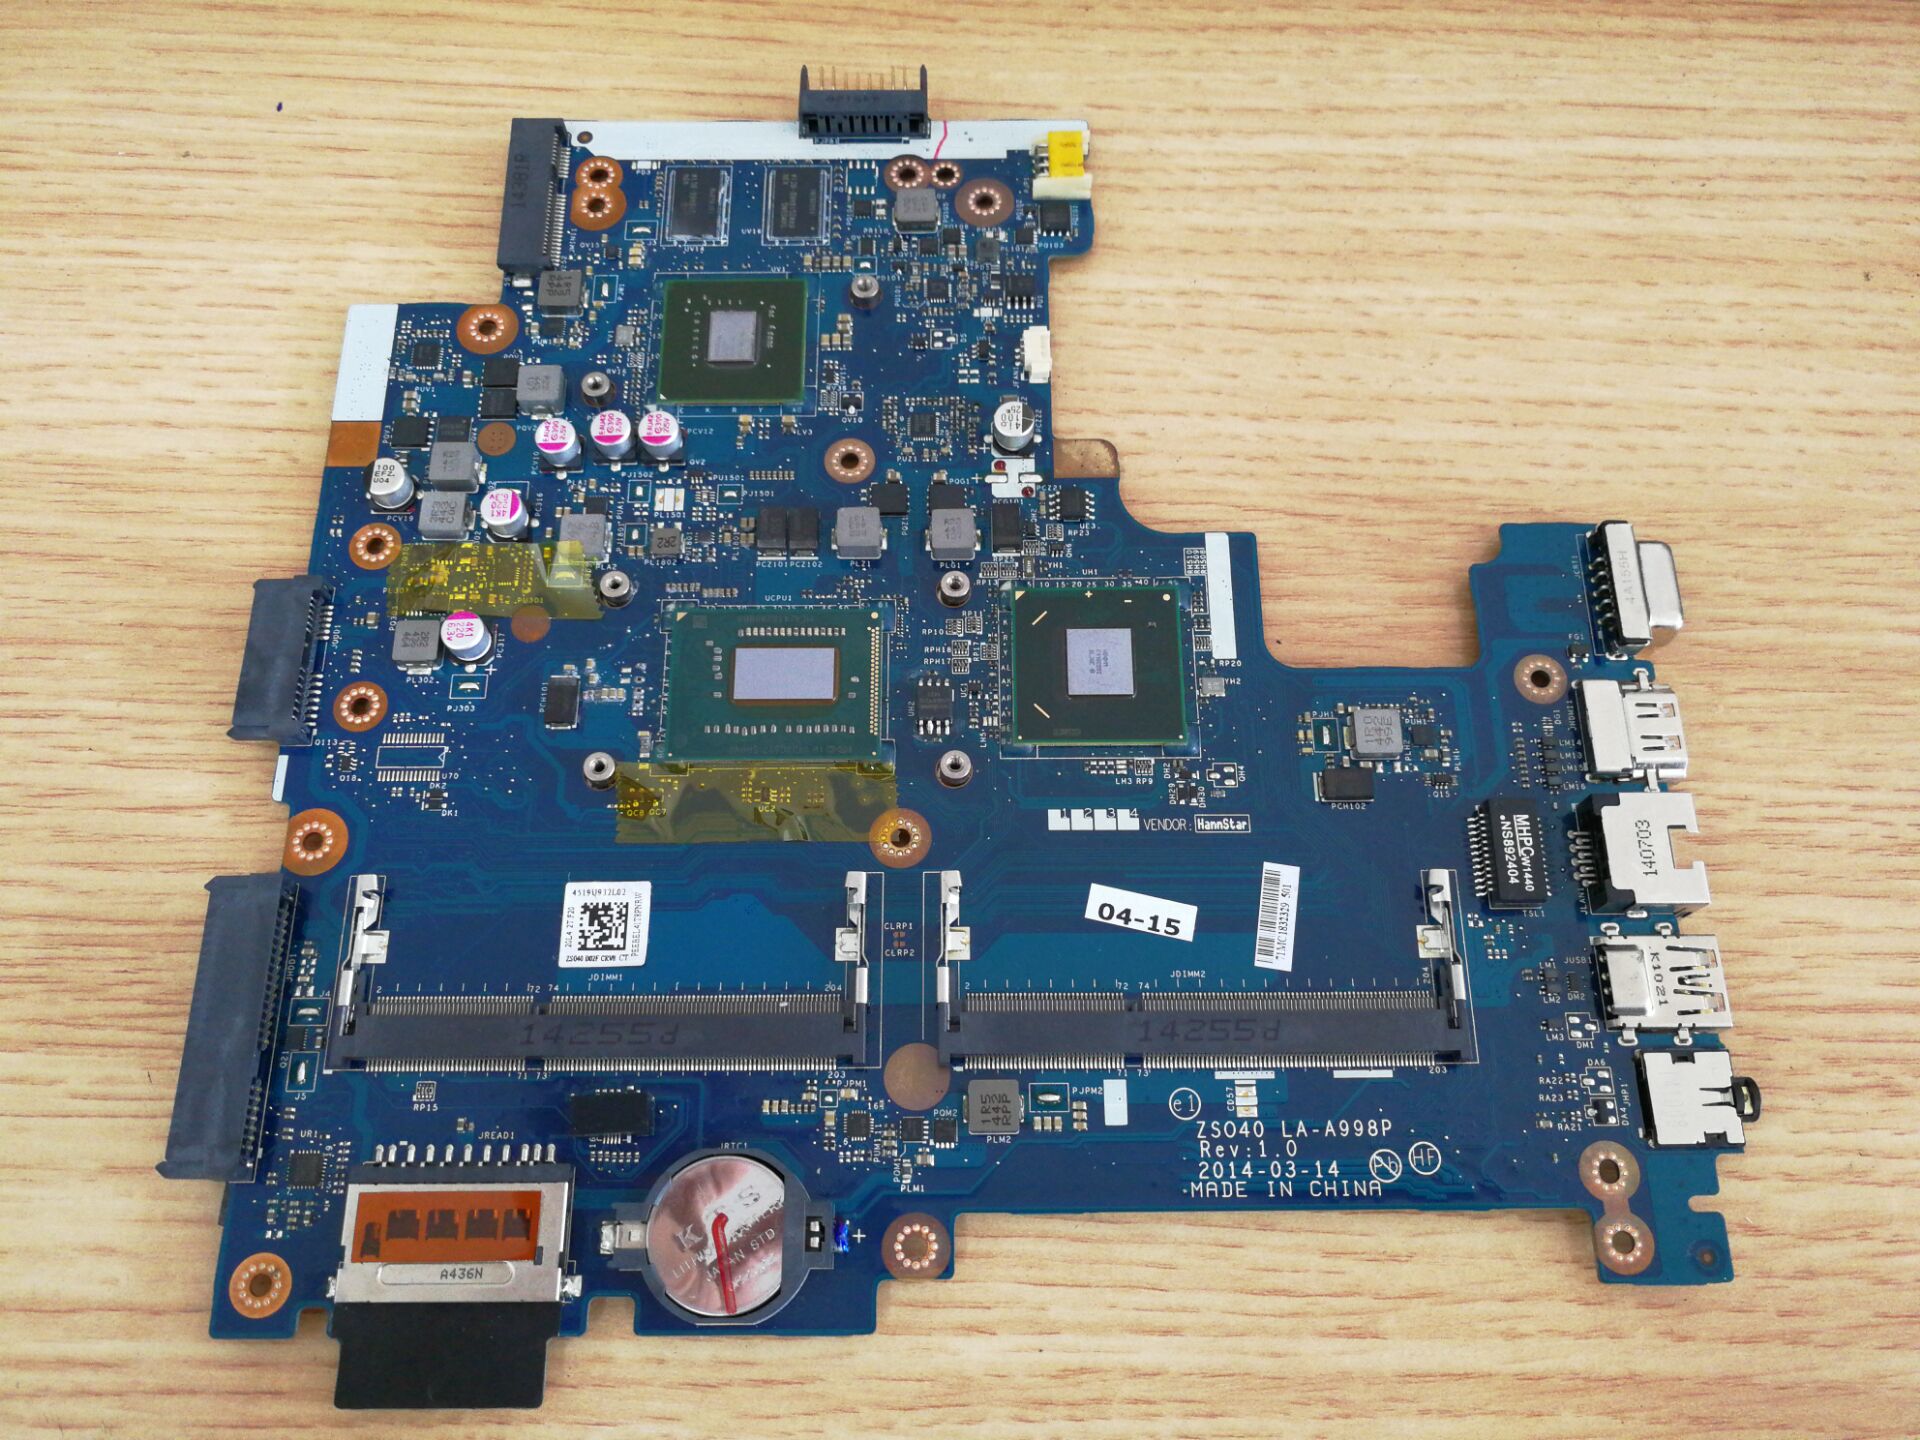 HP 14-R i3-3217U Motherboard ZSO40 LA-A998P 760686-501 Geforce 8